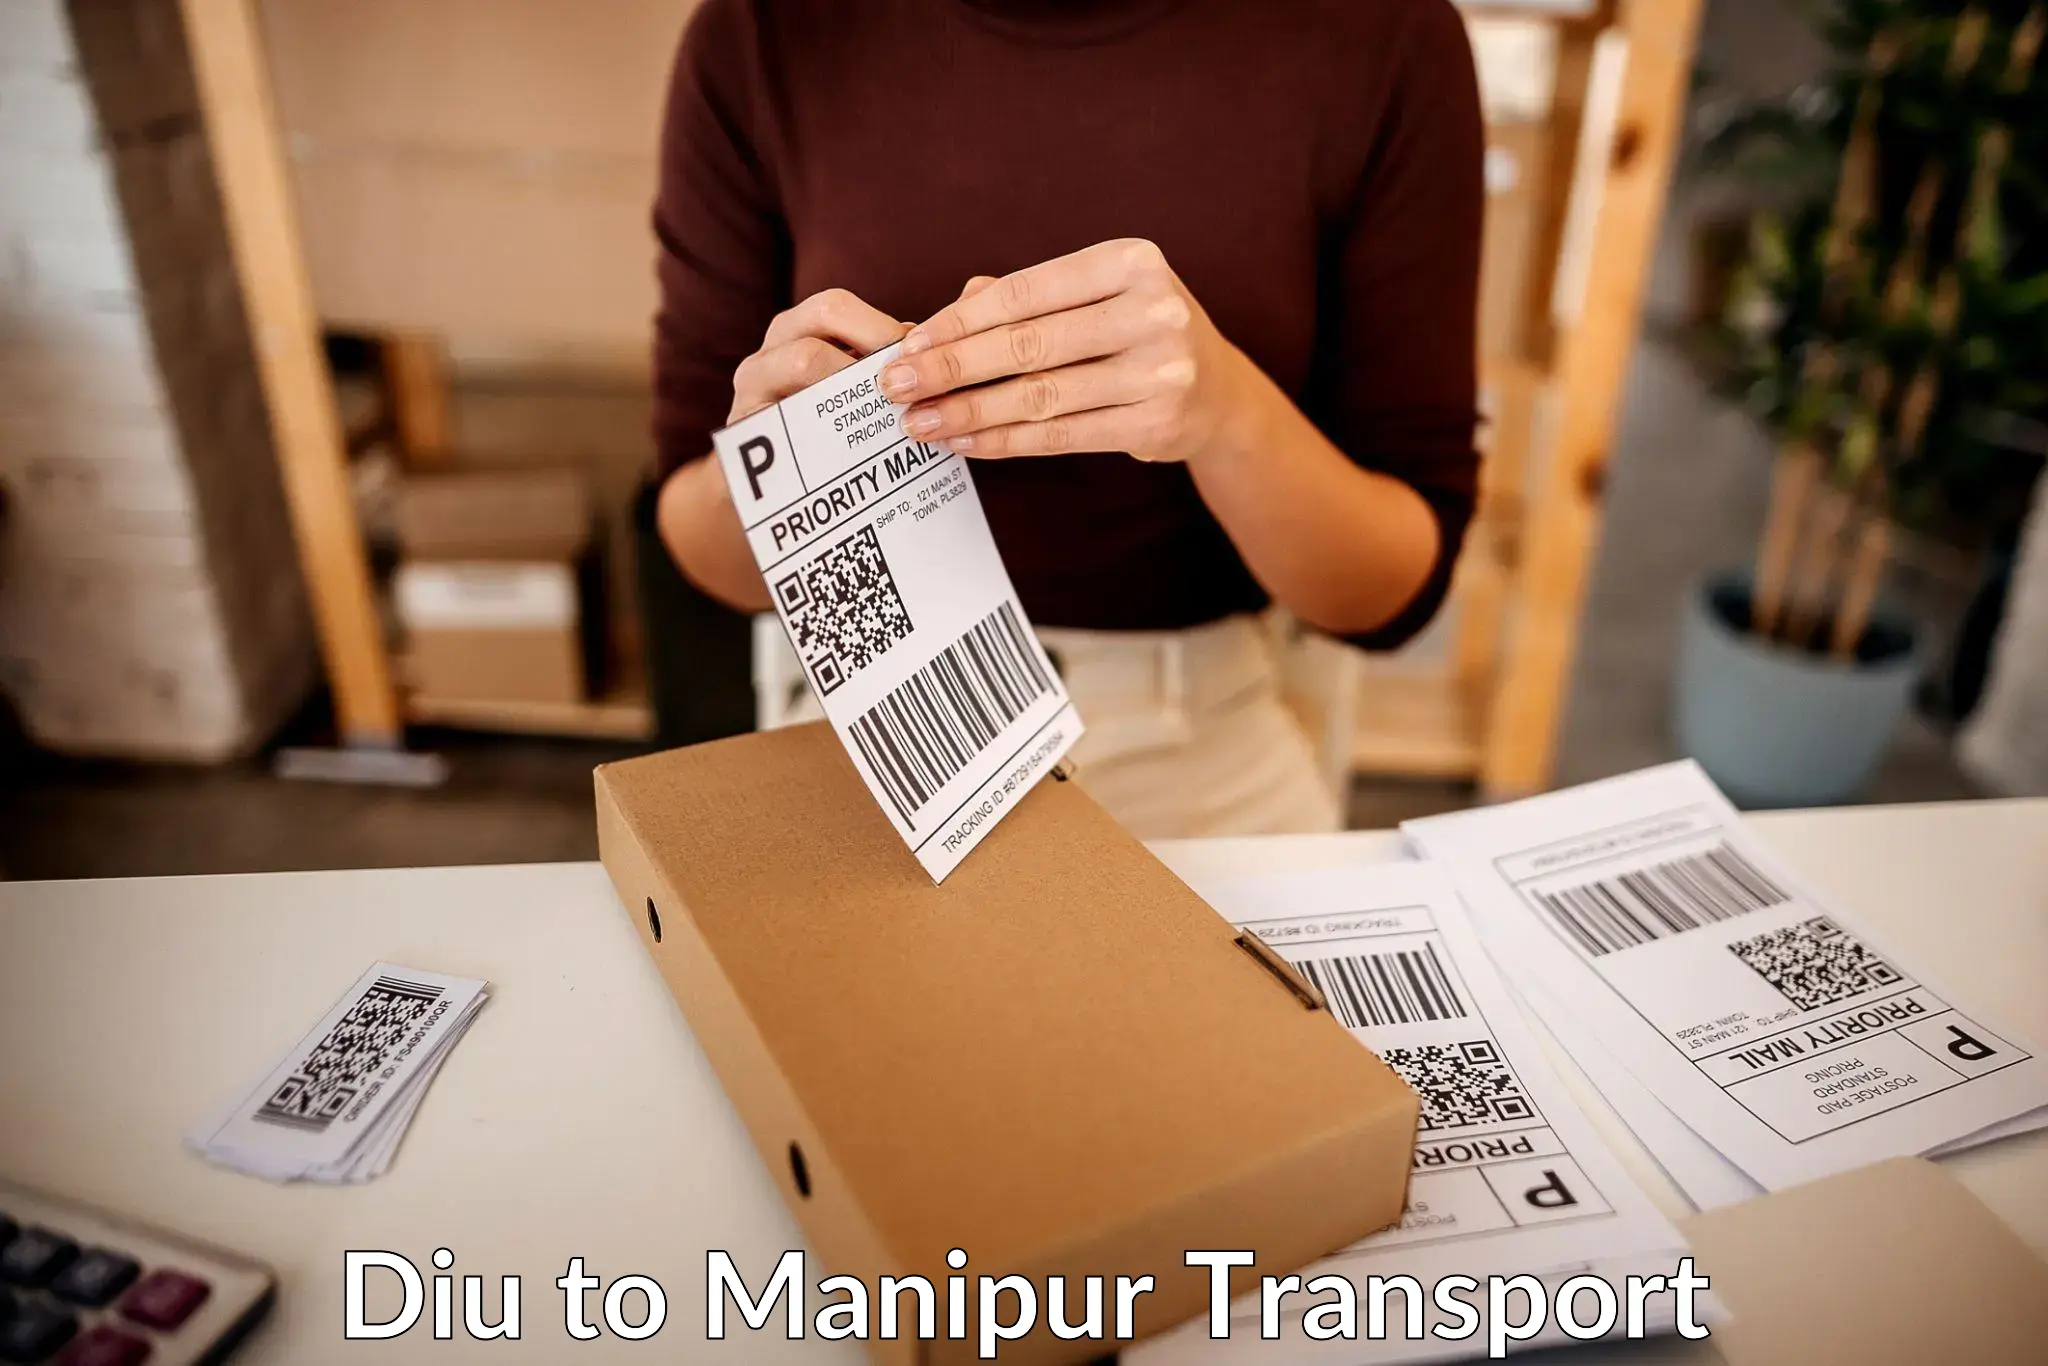 Truck transport companies in India Diu to Kanti